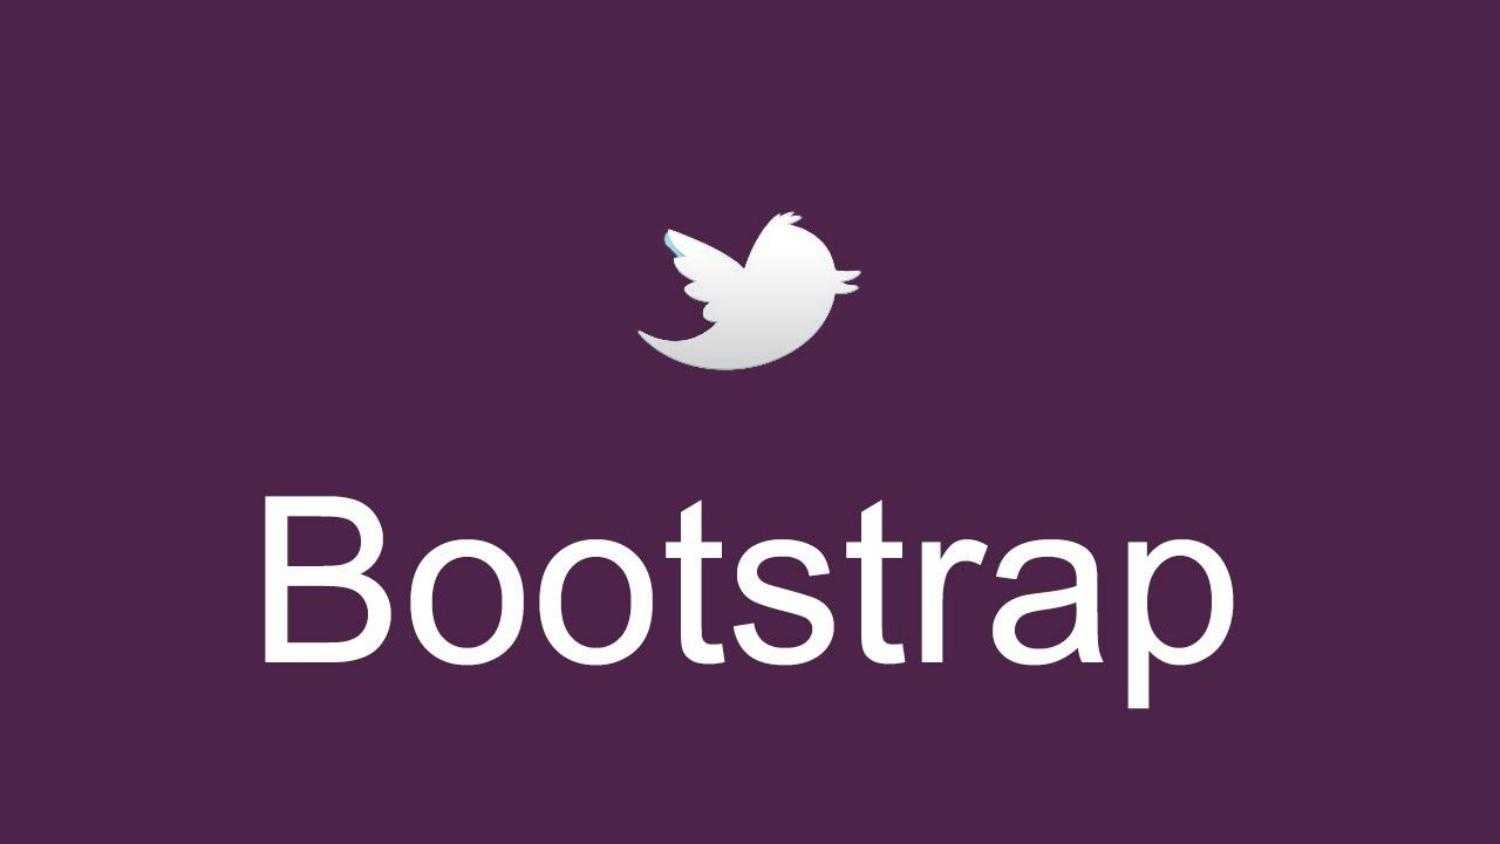 Load bootstrap. Bootstrap. Картинка Bootstrap. Bootstrap (фреймворк). Bootstrap логотип.